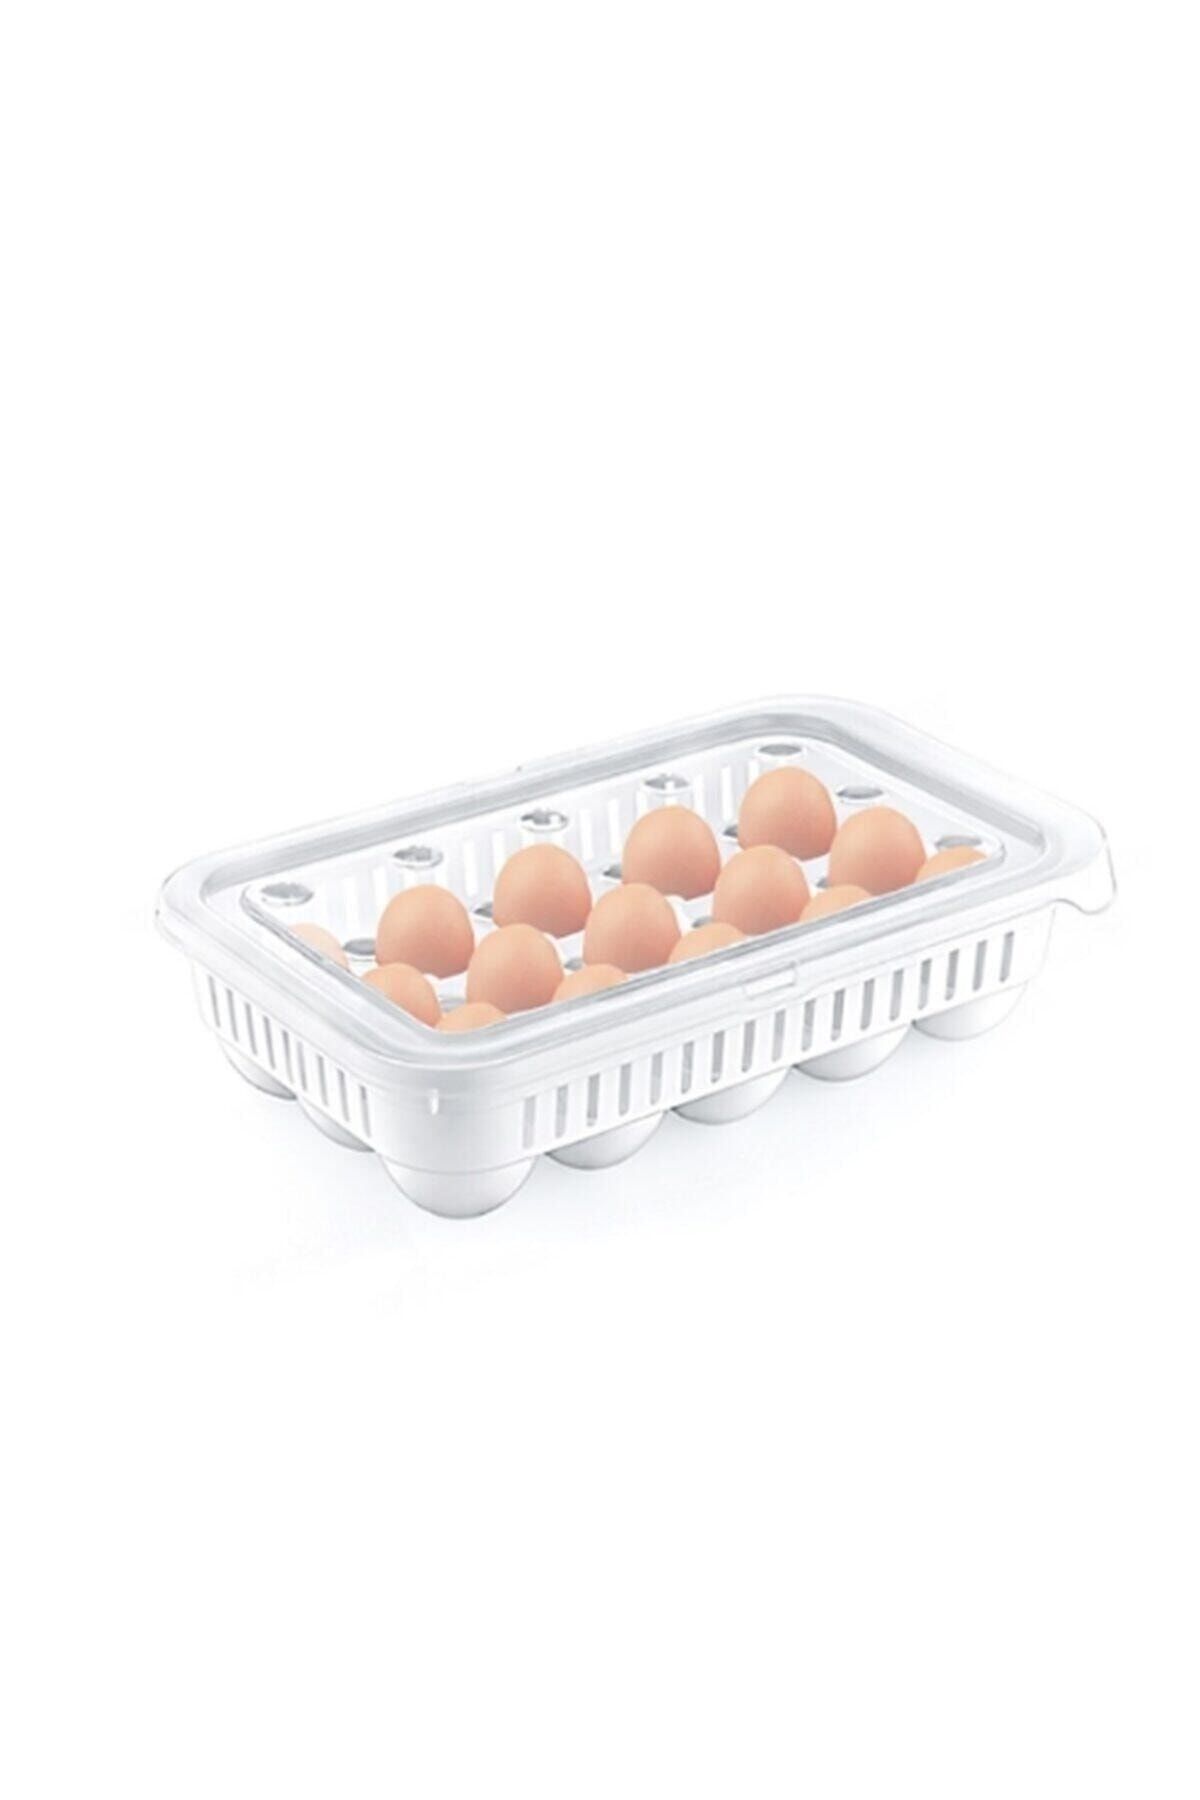 BİOONDE Yumurta Saklama Kabı 15;li 2 Adet, Steril Yumurtalık, Kapaklı Yumurta Organizeri